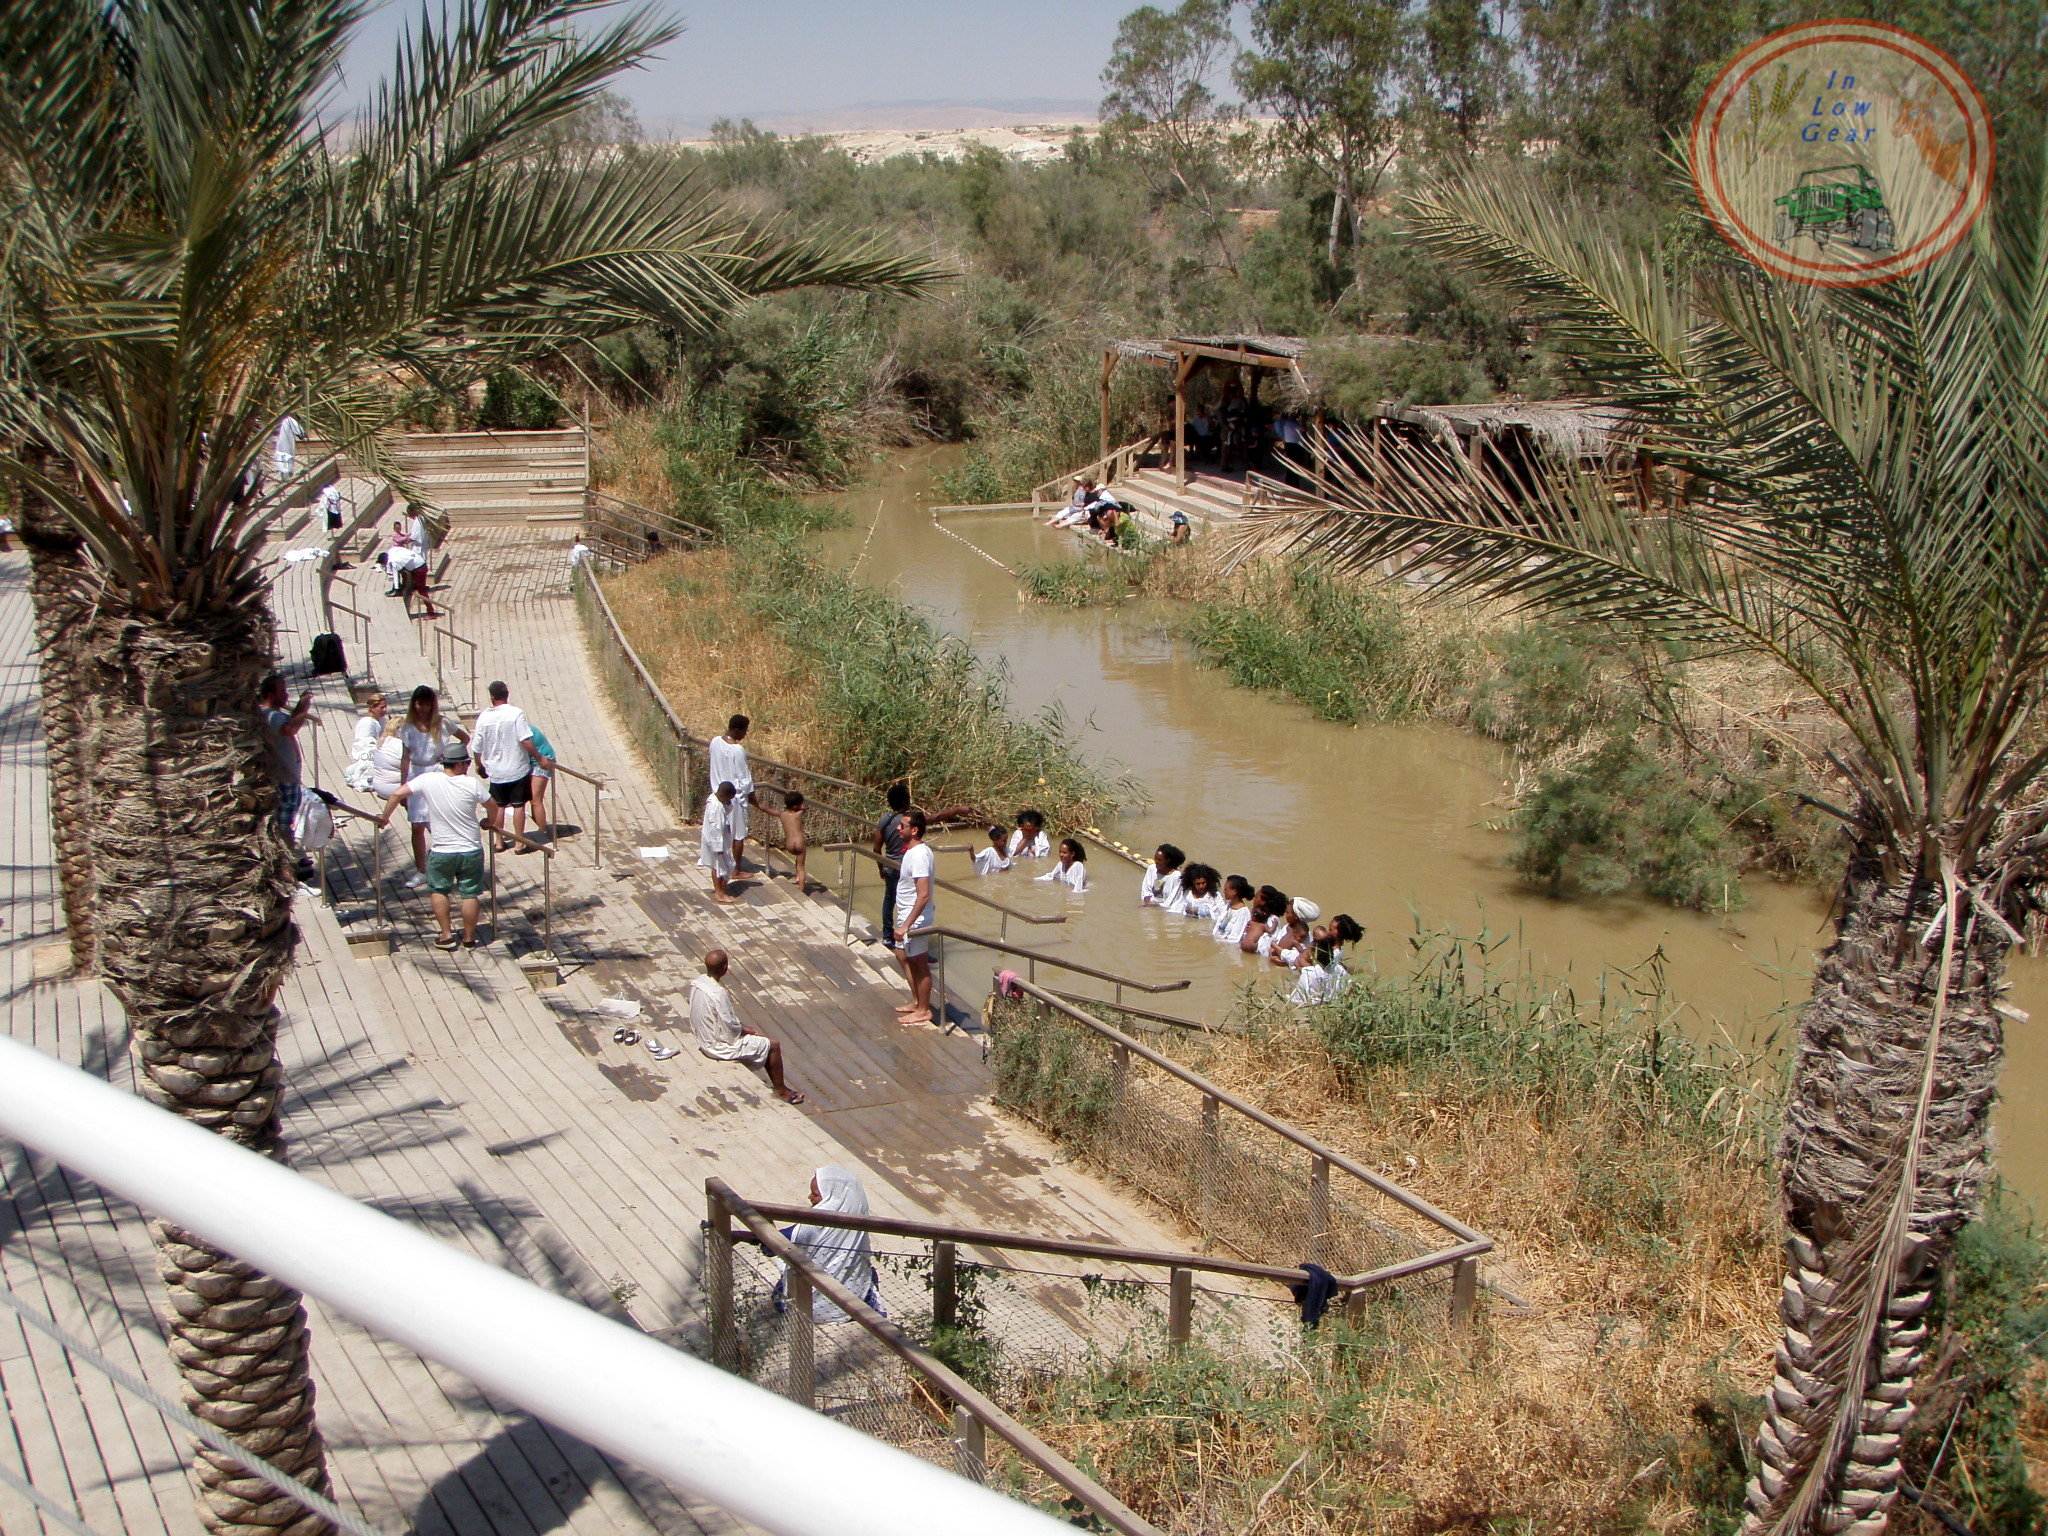 Qasr-el-Yahud, John, Baptizing site on the Jordan, Israelite Jordan crossing and Elijah departs in a fire chariot.